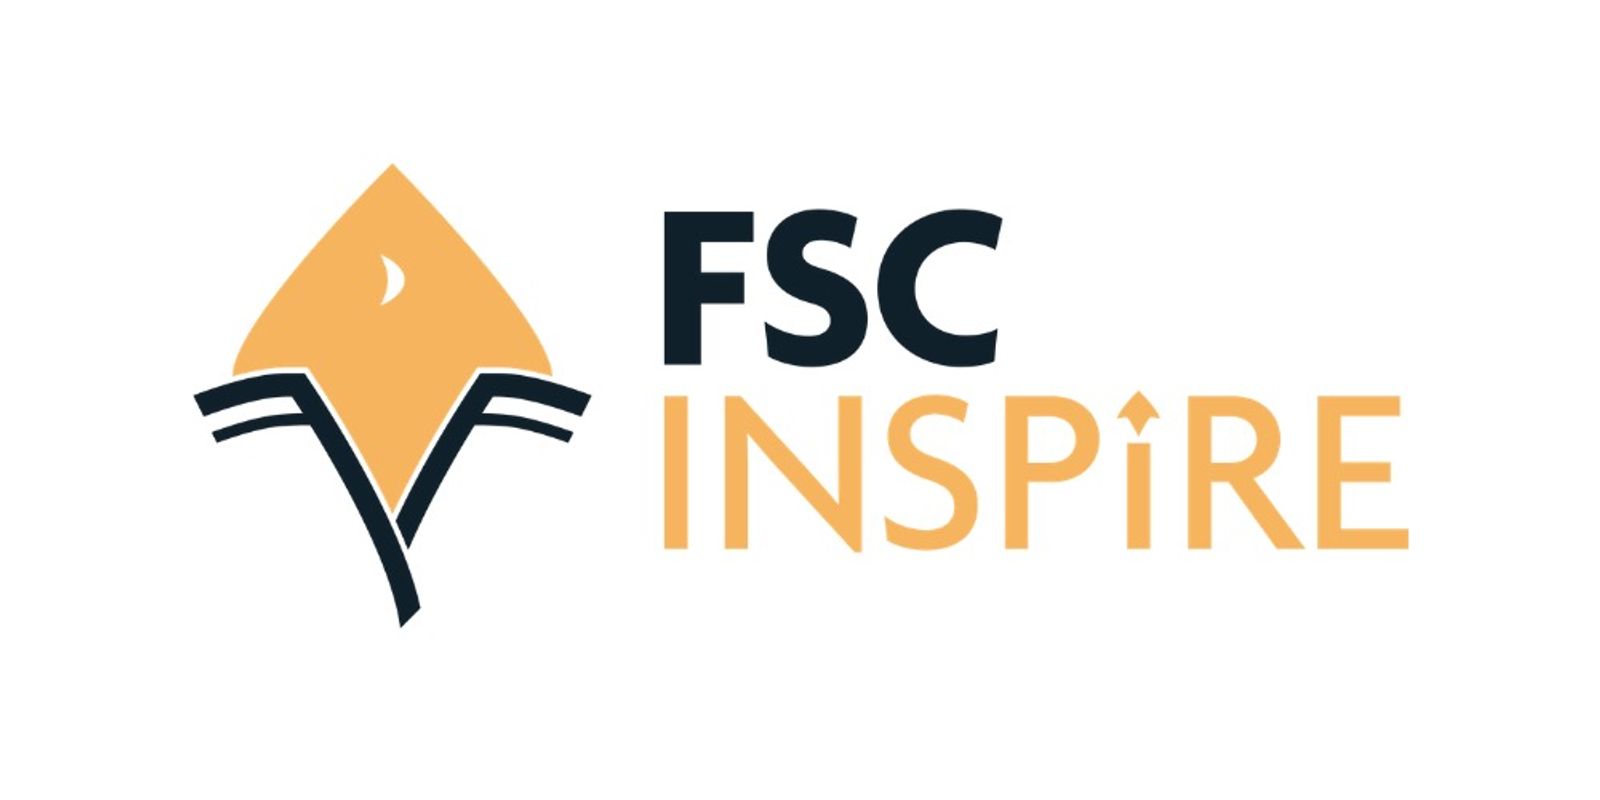 FSC INSPIRE to Host Panel Thursday on Taxes, PPP Loans